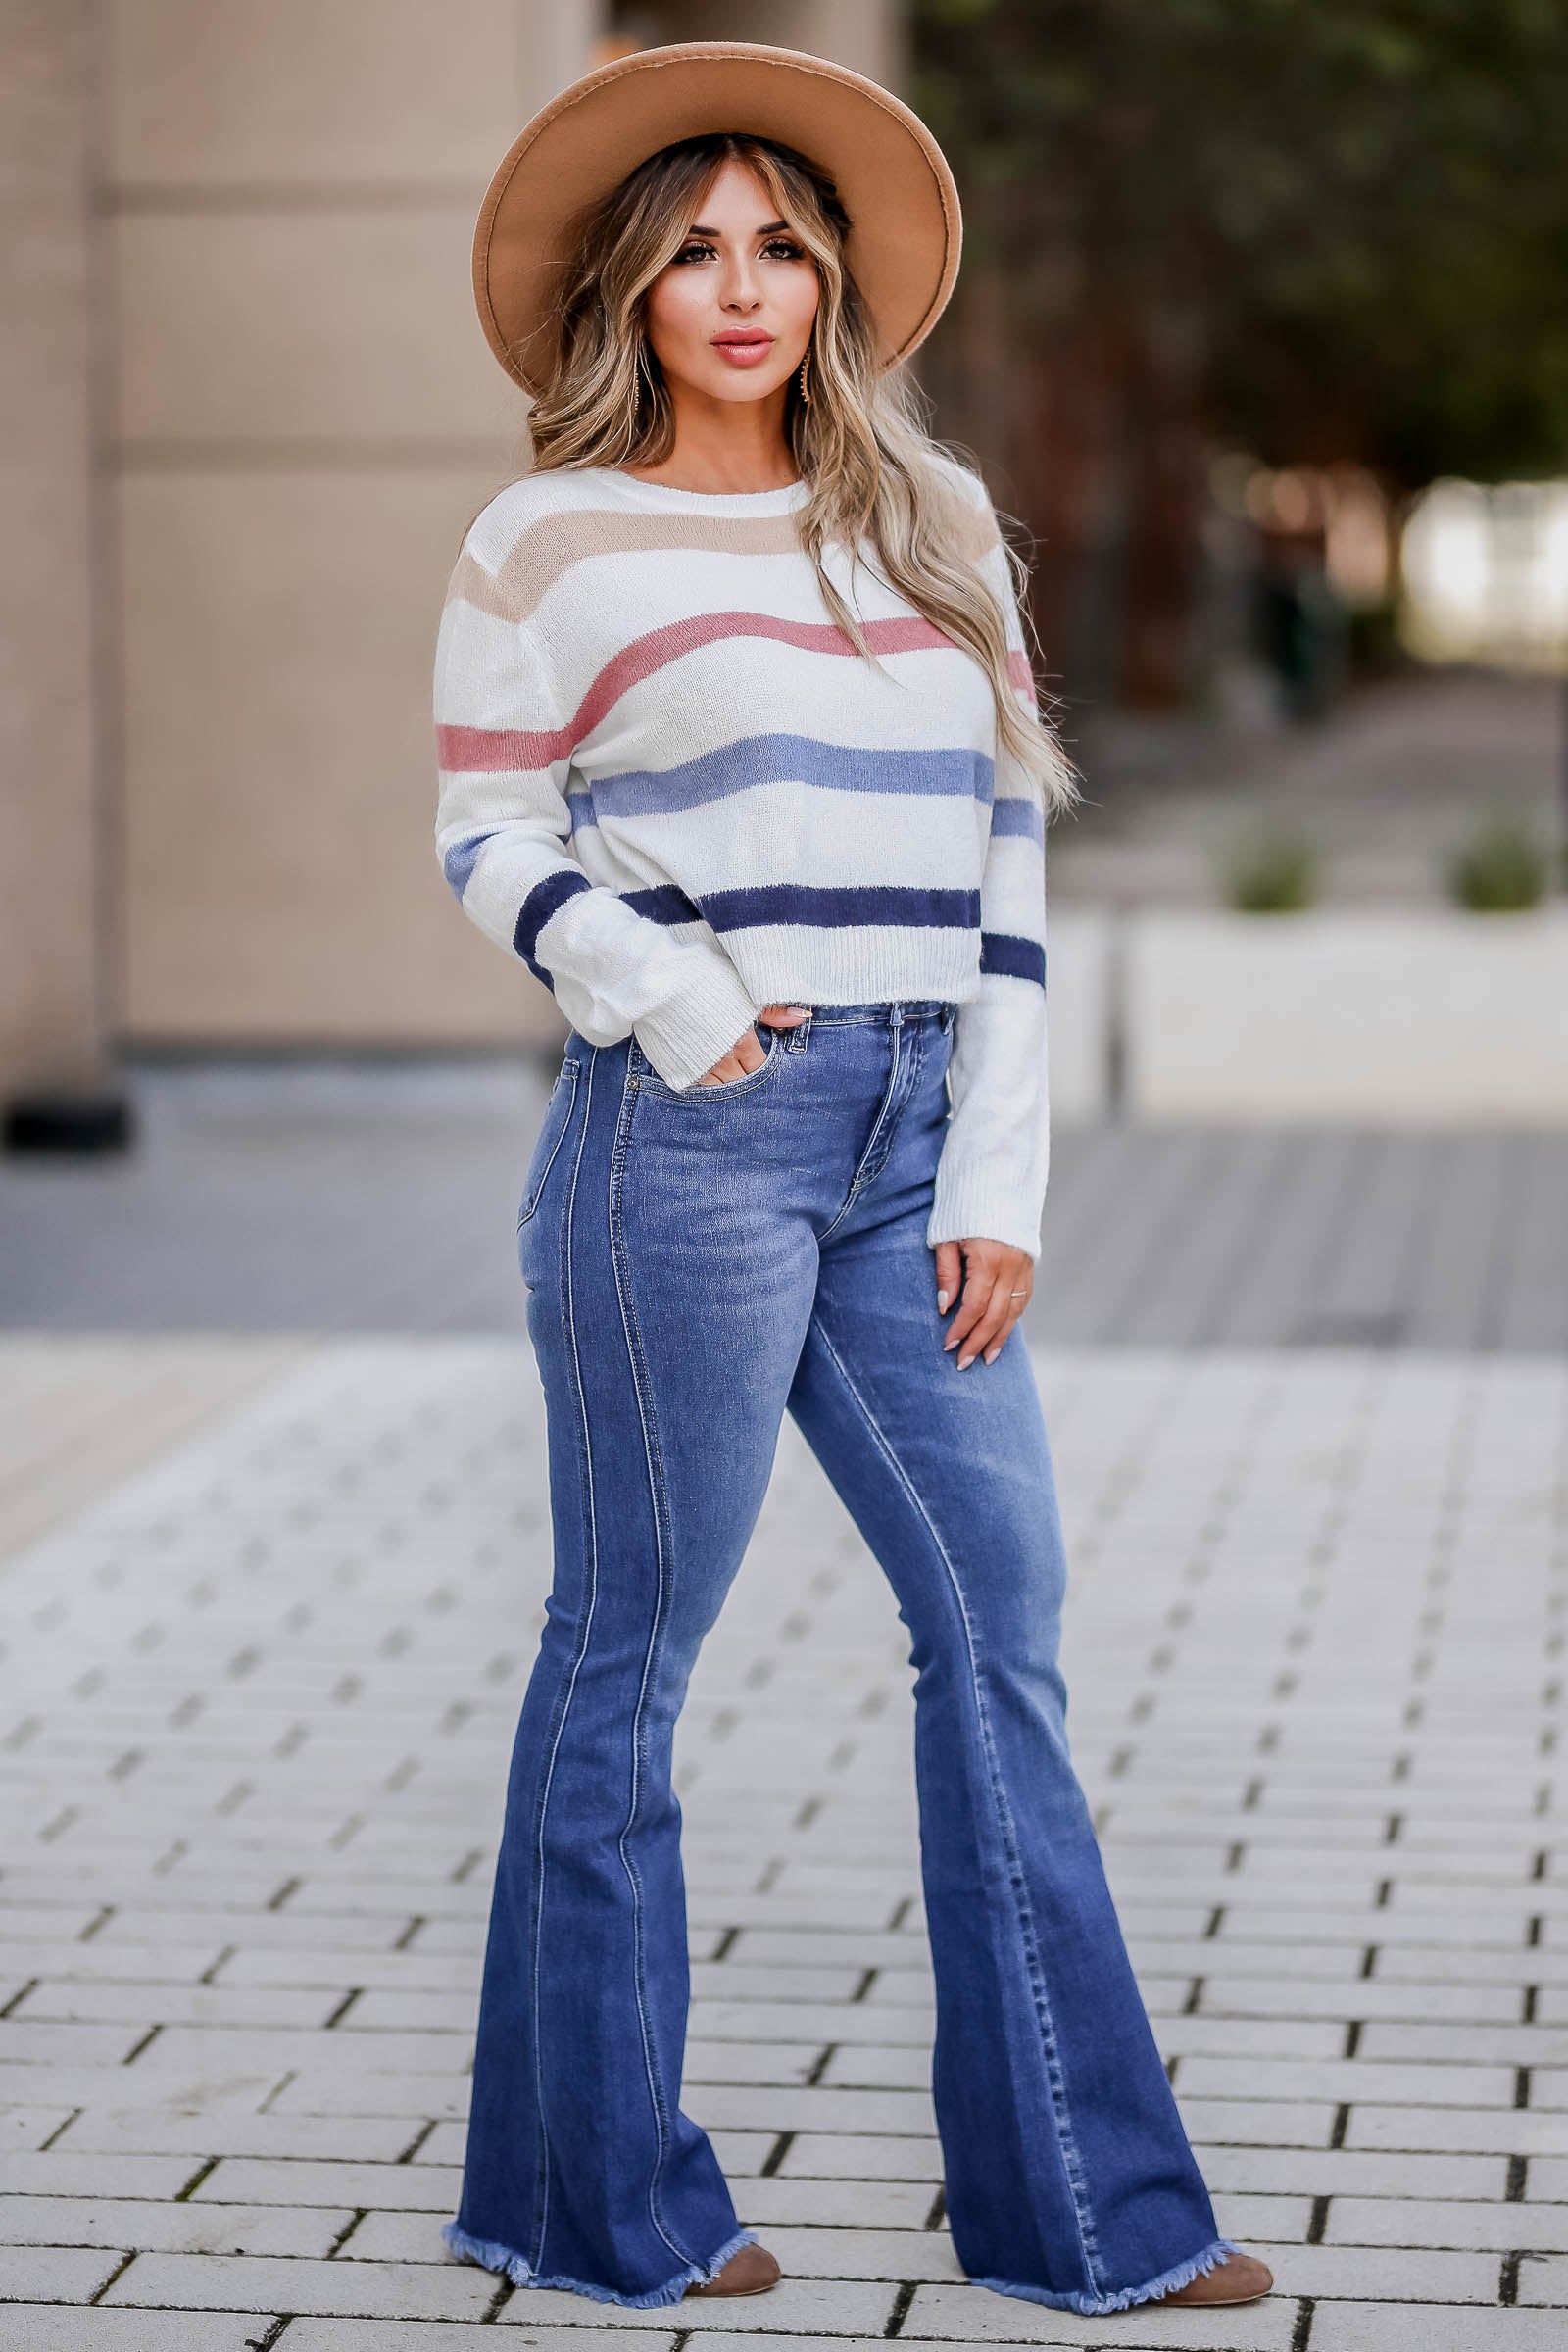 Better in Color Striped Sweater - Multi